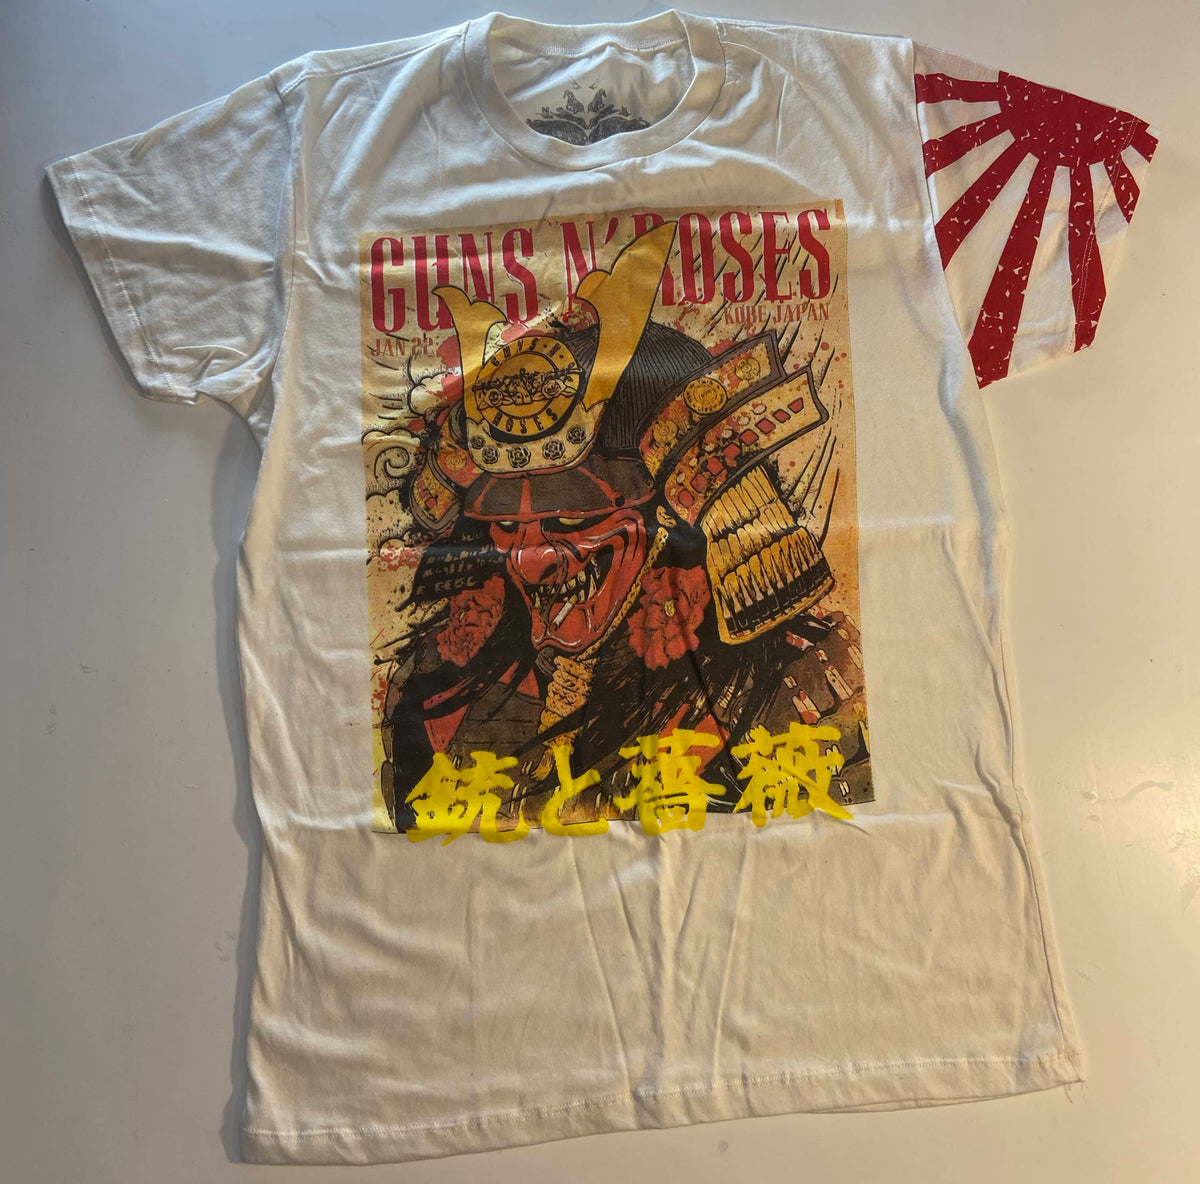 Guns N' Roses - Live in Kobe